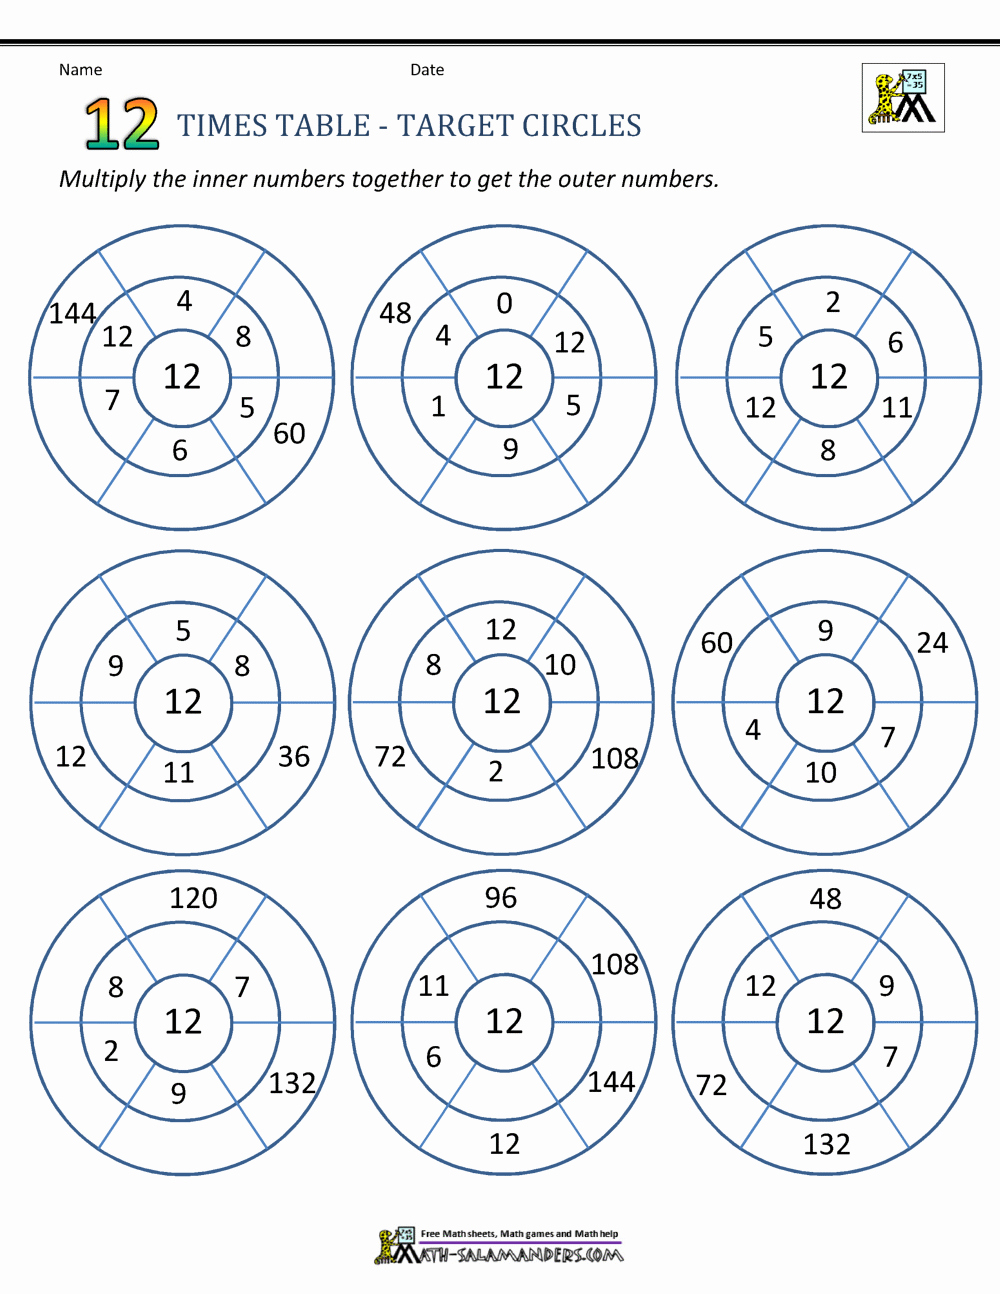 Multiplication Table Worksheet Luxury 12 Times Tables Worksheets